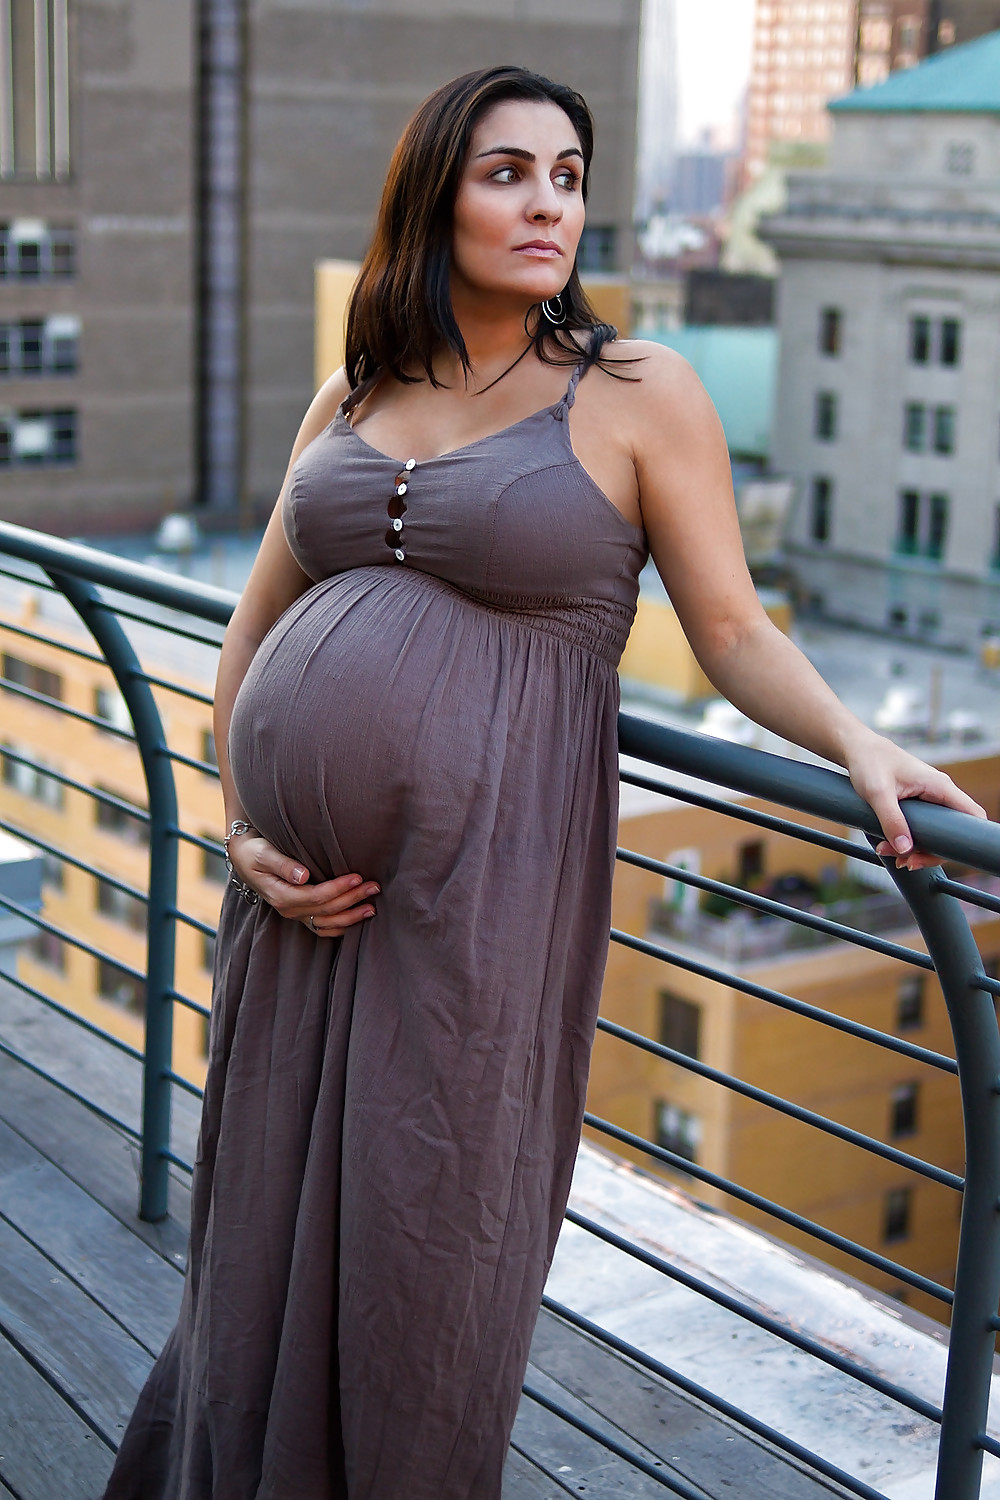 Sexy chicas embarazadas (vestidas)
 #17744777